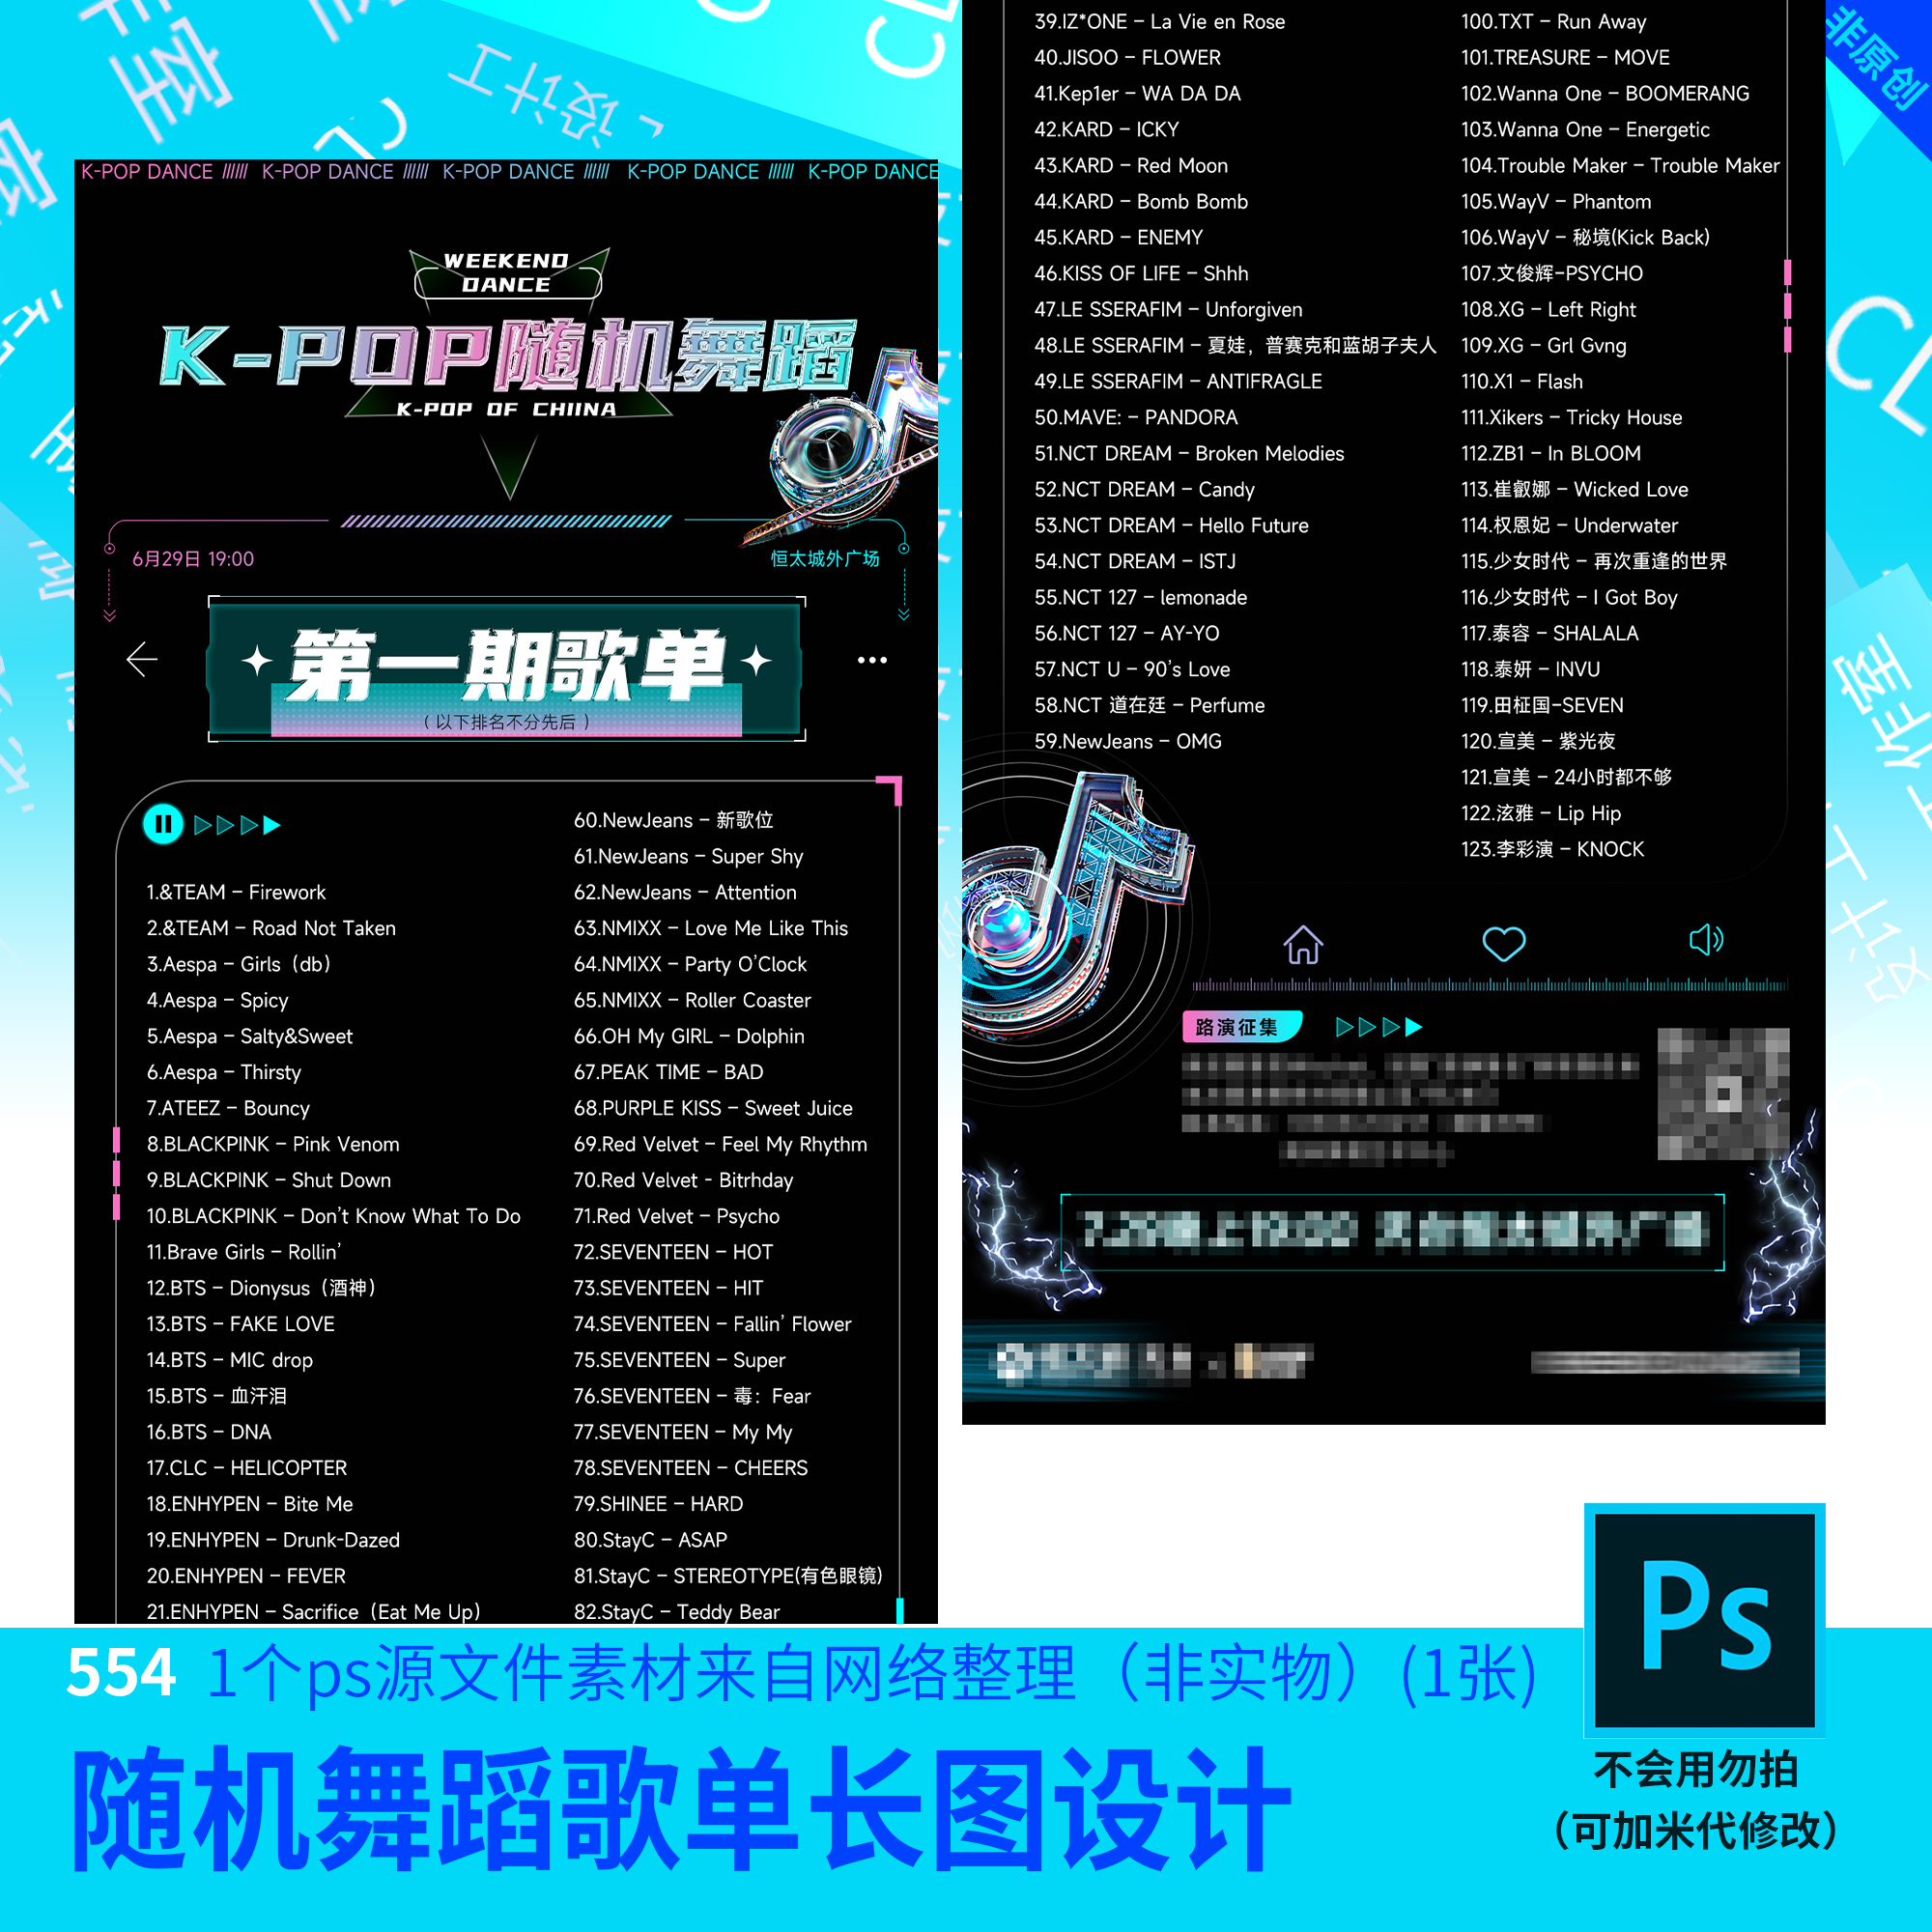 Kpop随机歌舞歌单长图源文件街舞海报设计素材PSD源文件模板554